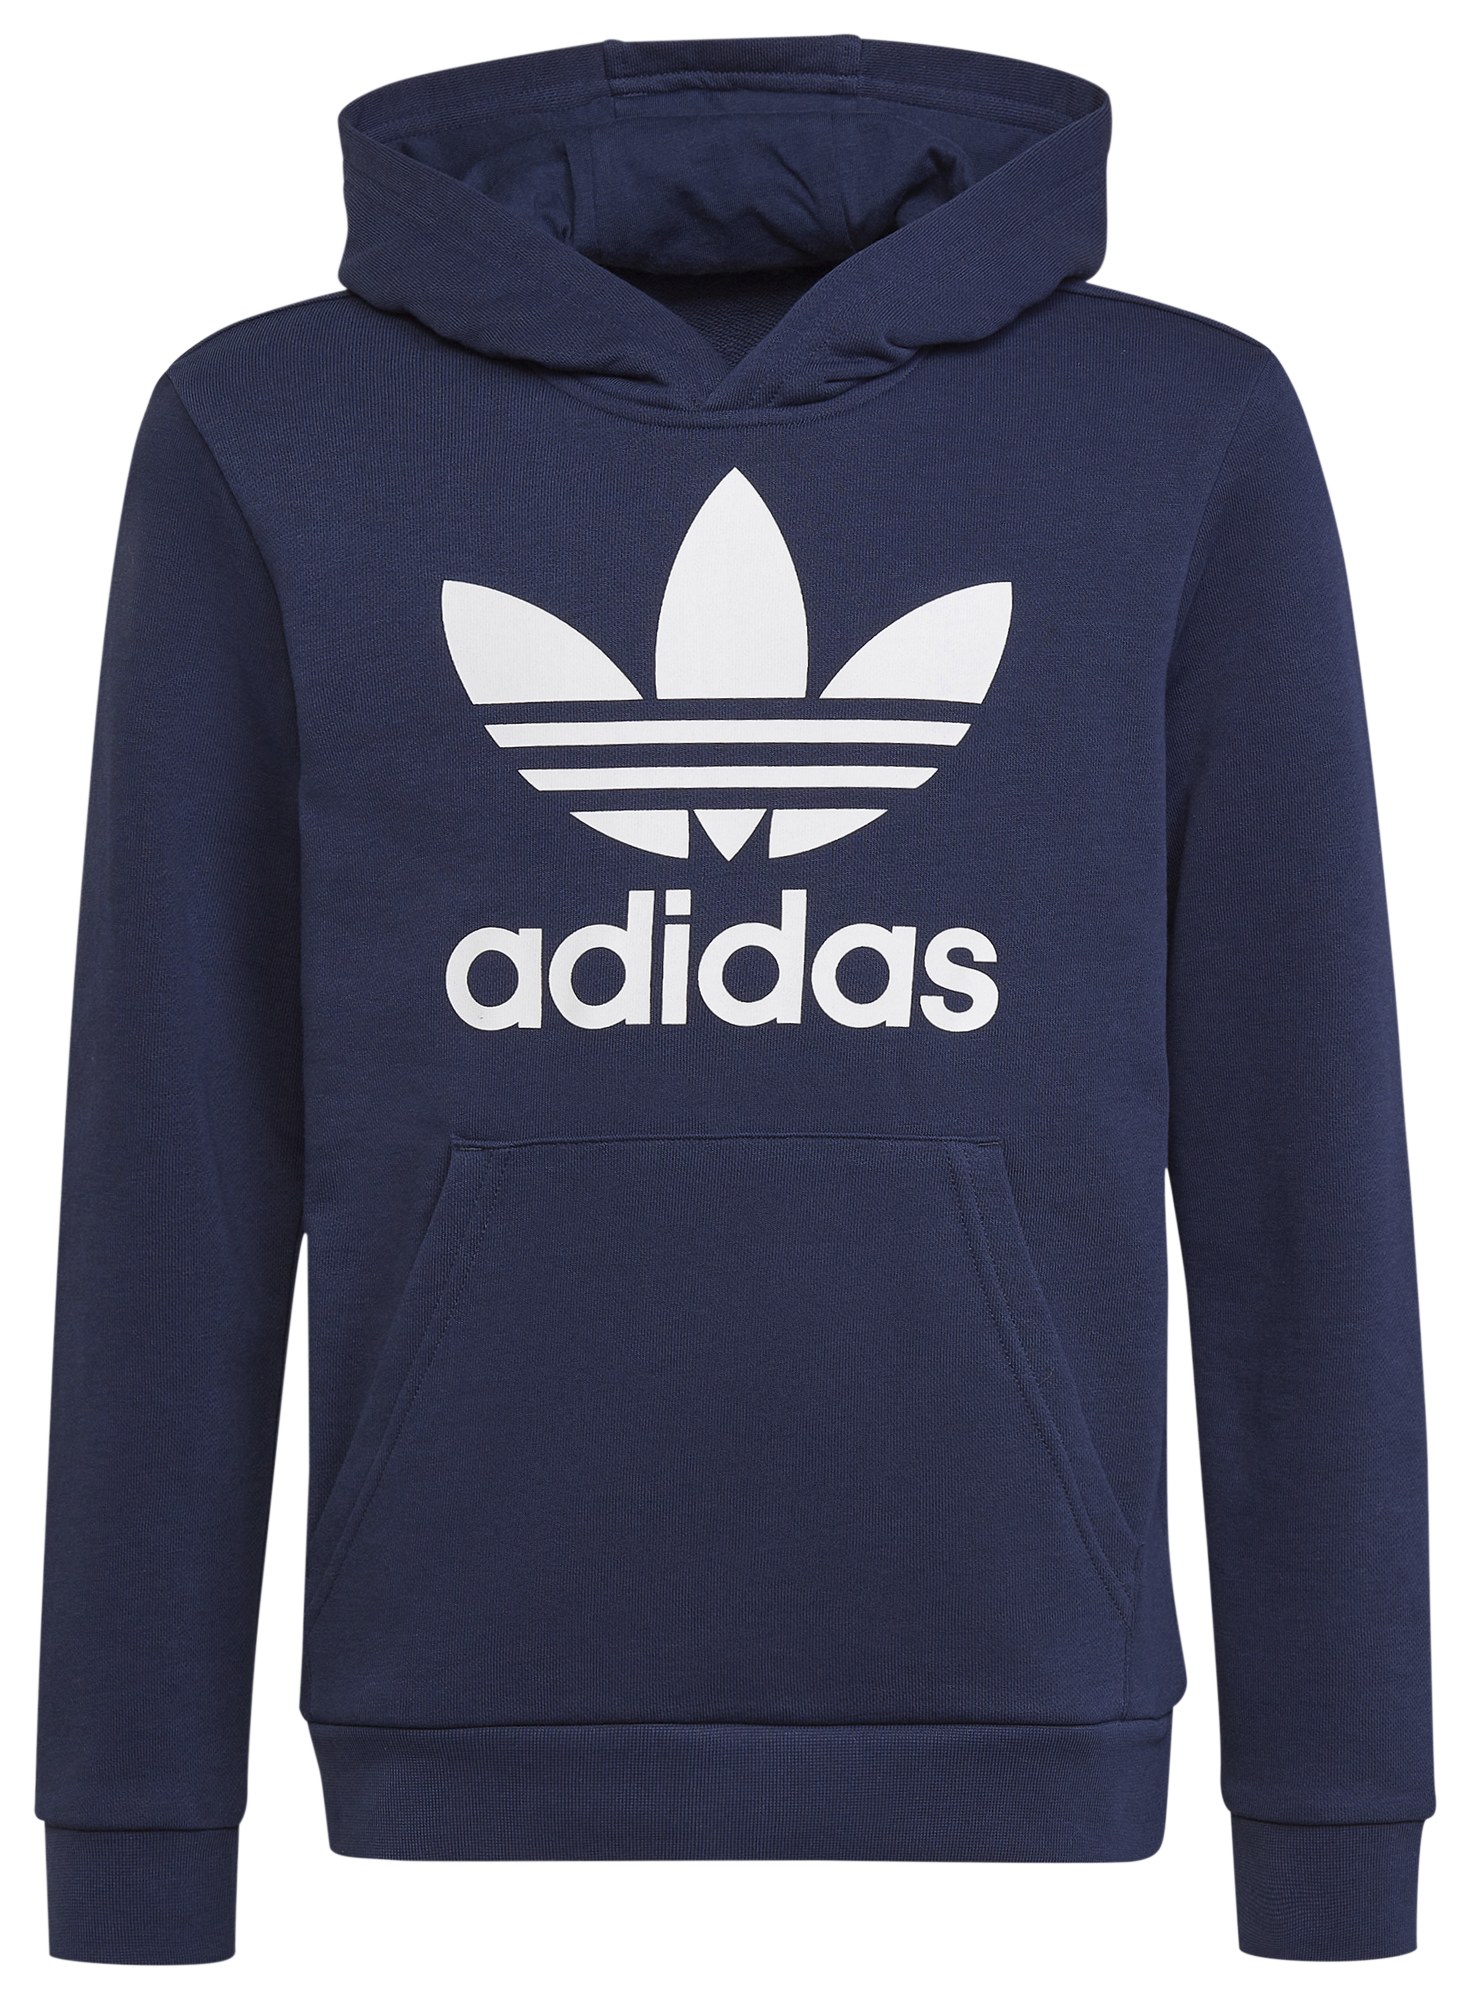 Adidas Originals Trefoil Hoodie - Boys' Grade School | Westland